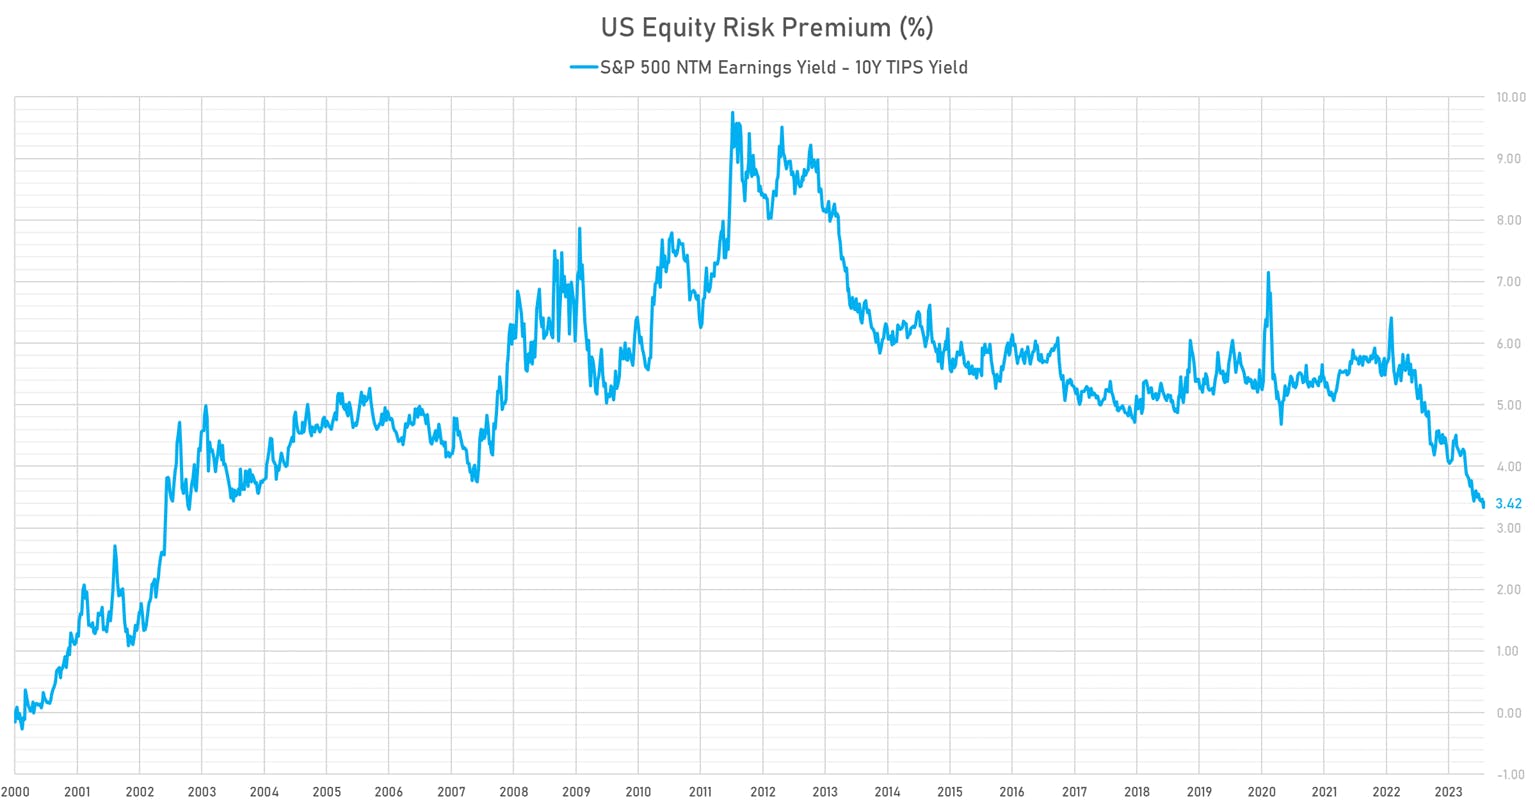 US Equity Risk Premium | Sources: phipost.com, Refinitiv data